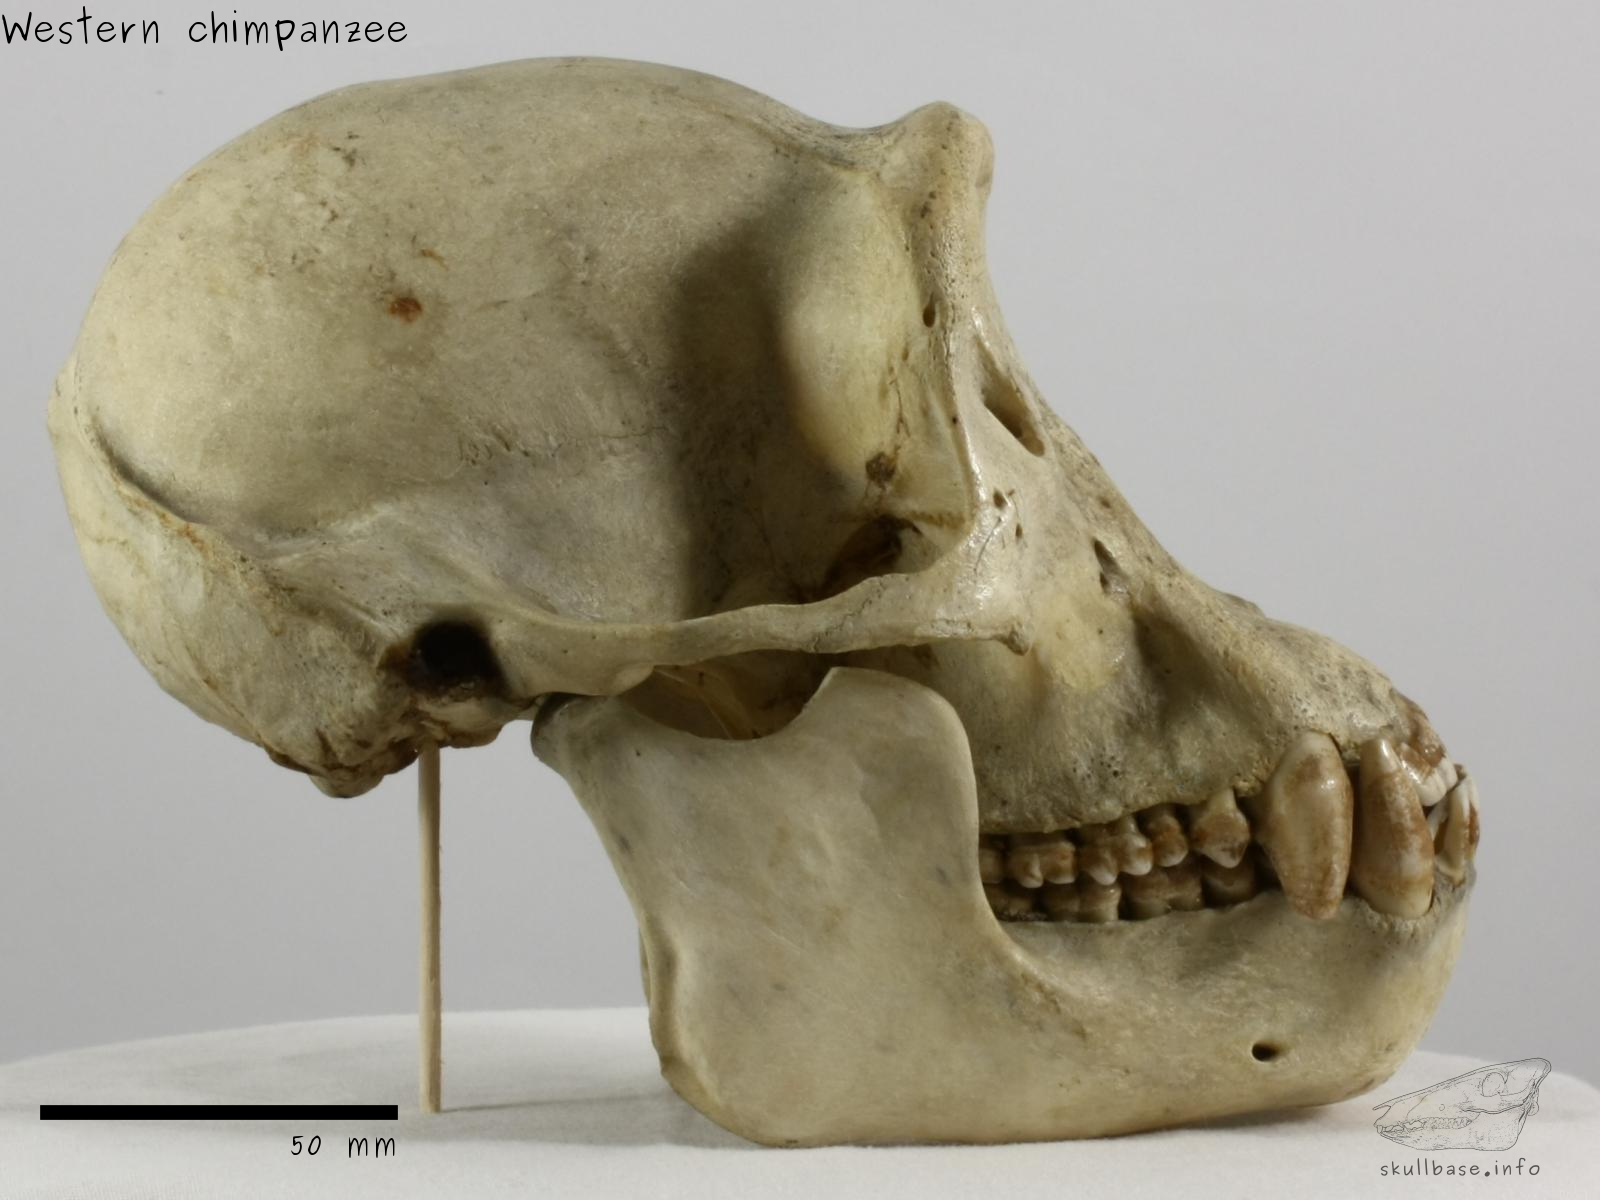 Western chimpanzee (Pan troglodytes verus) skull lateral view